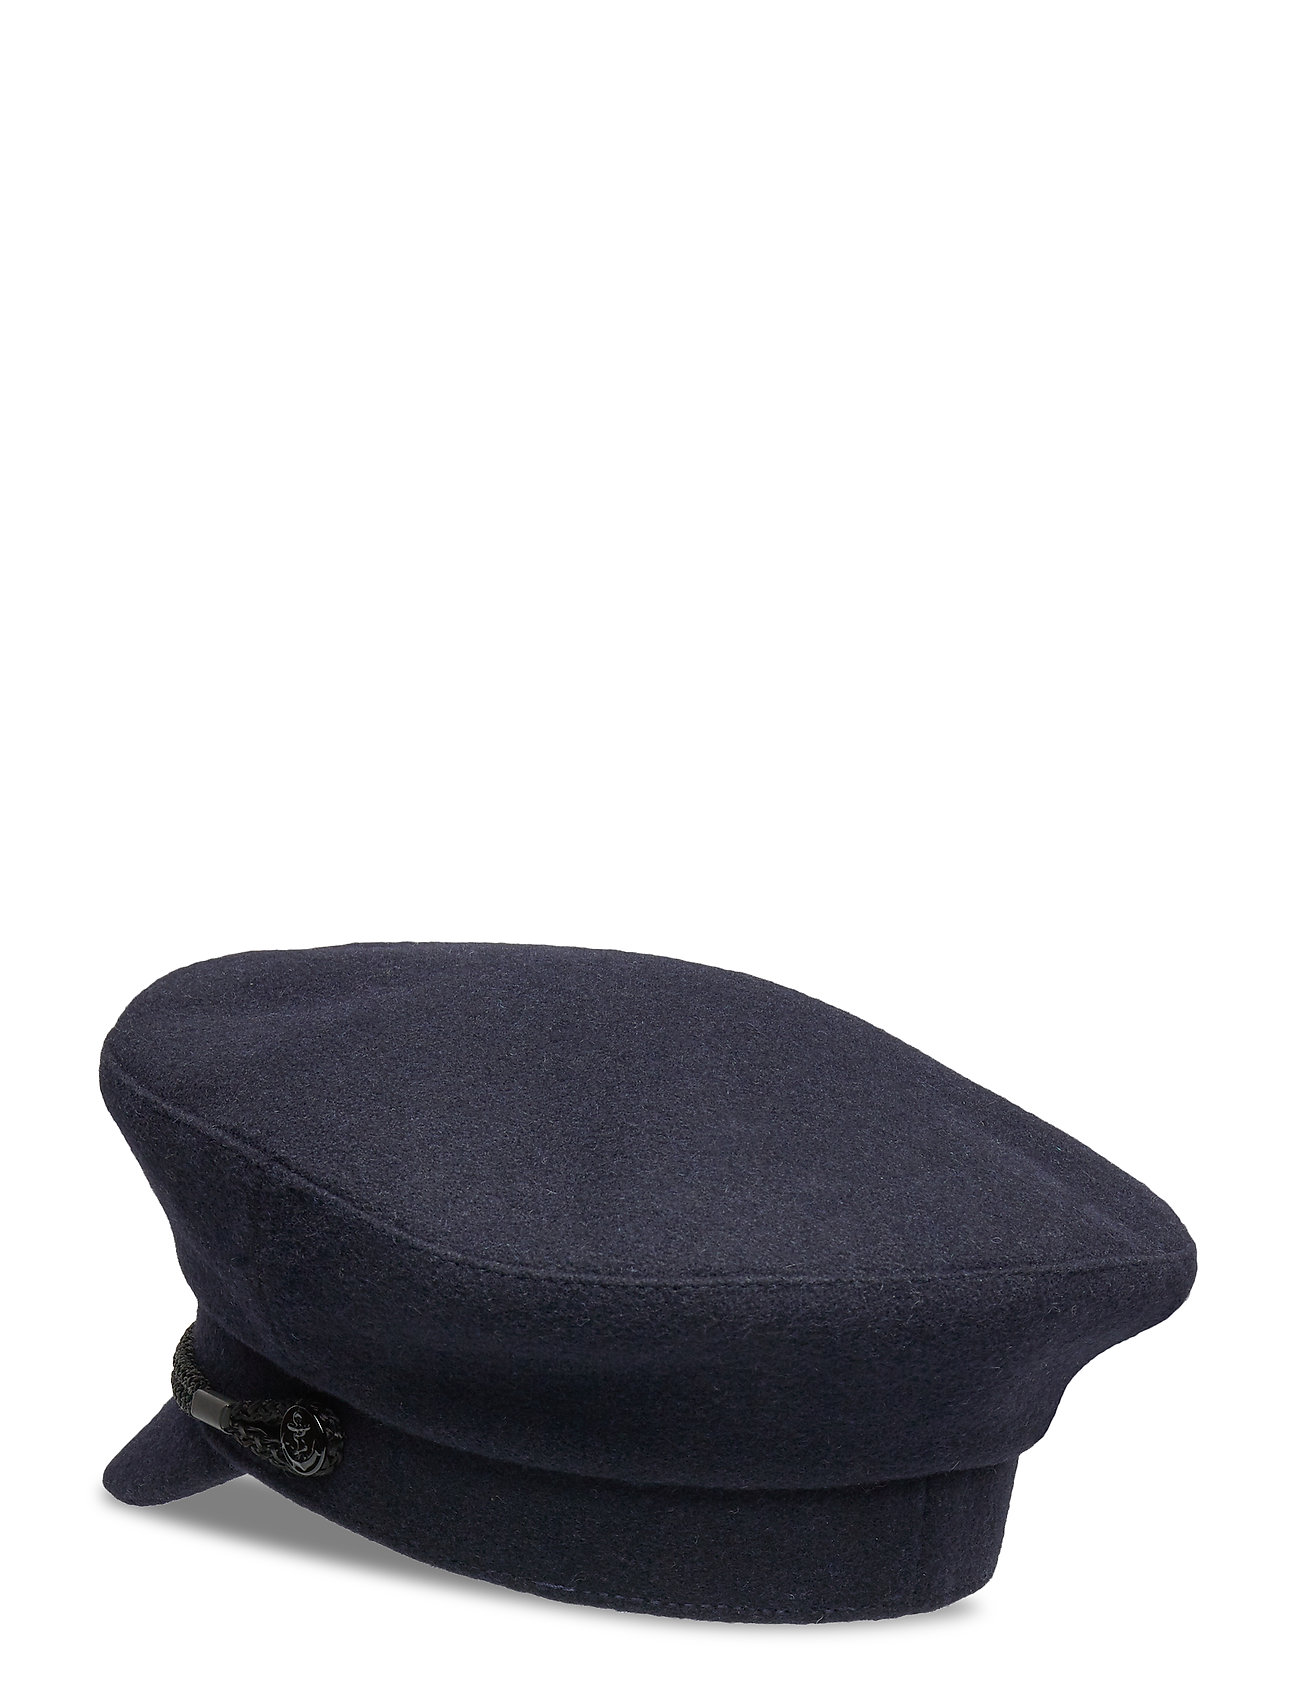 Mariner Hat Accessories Headwear Hats Blå Armor Lux